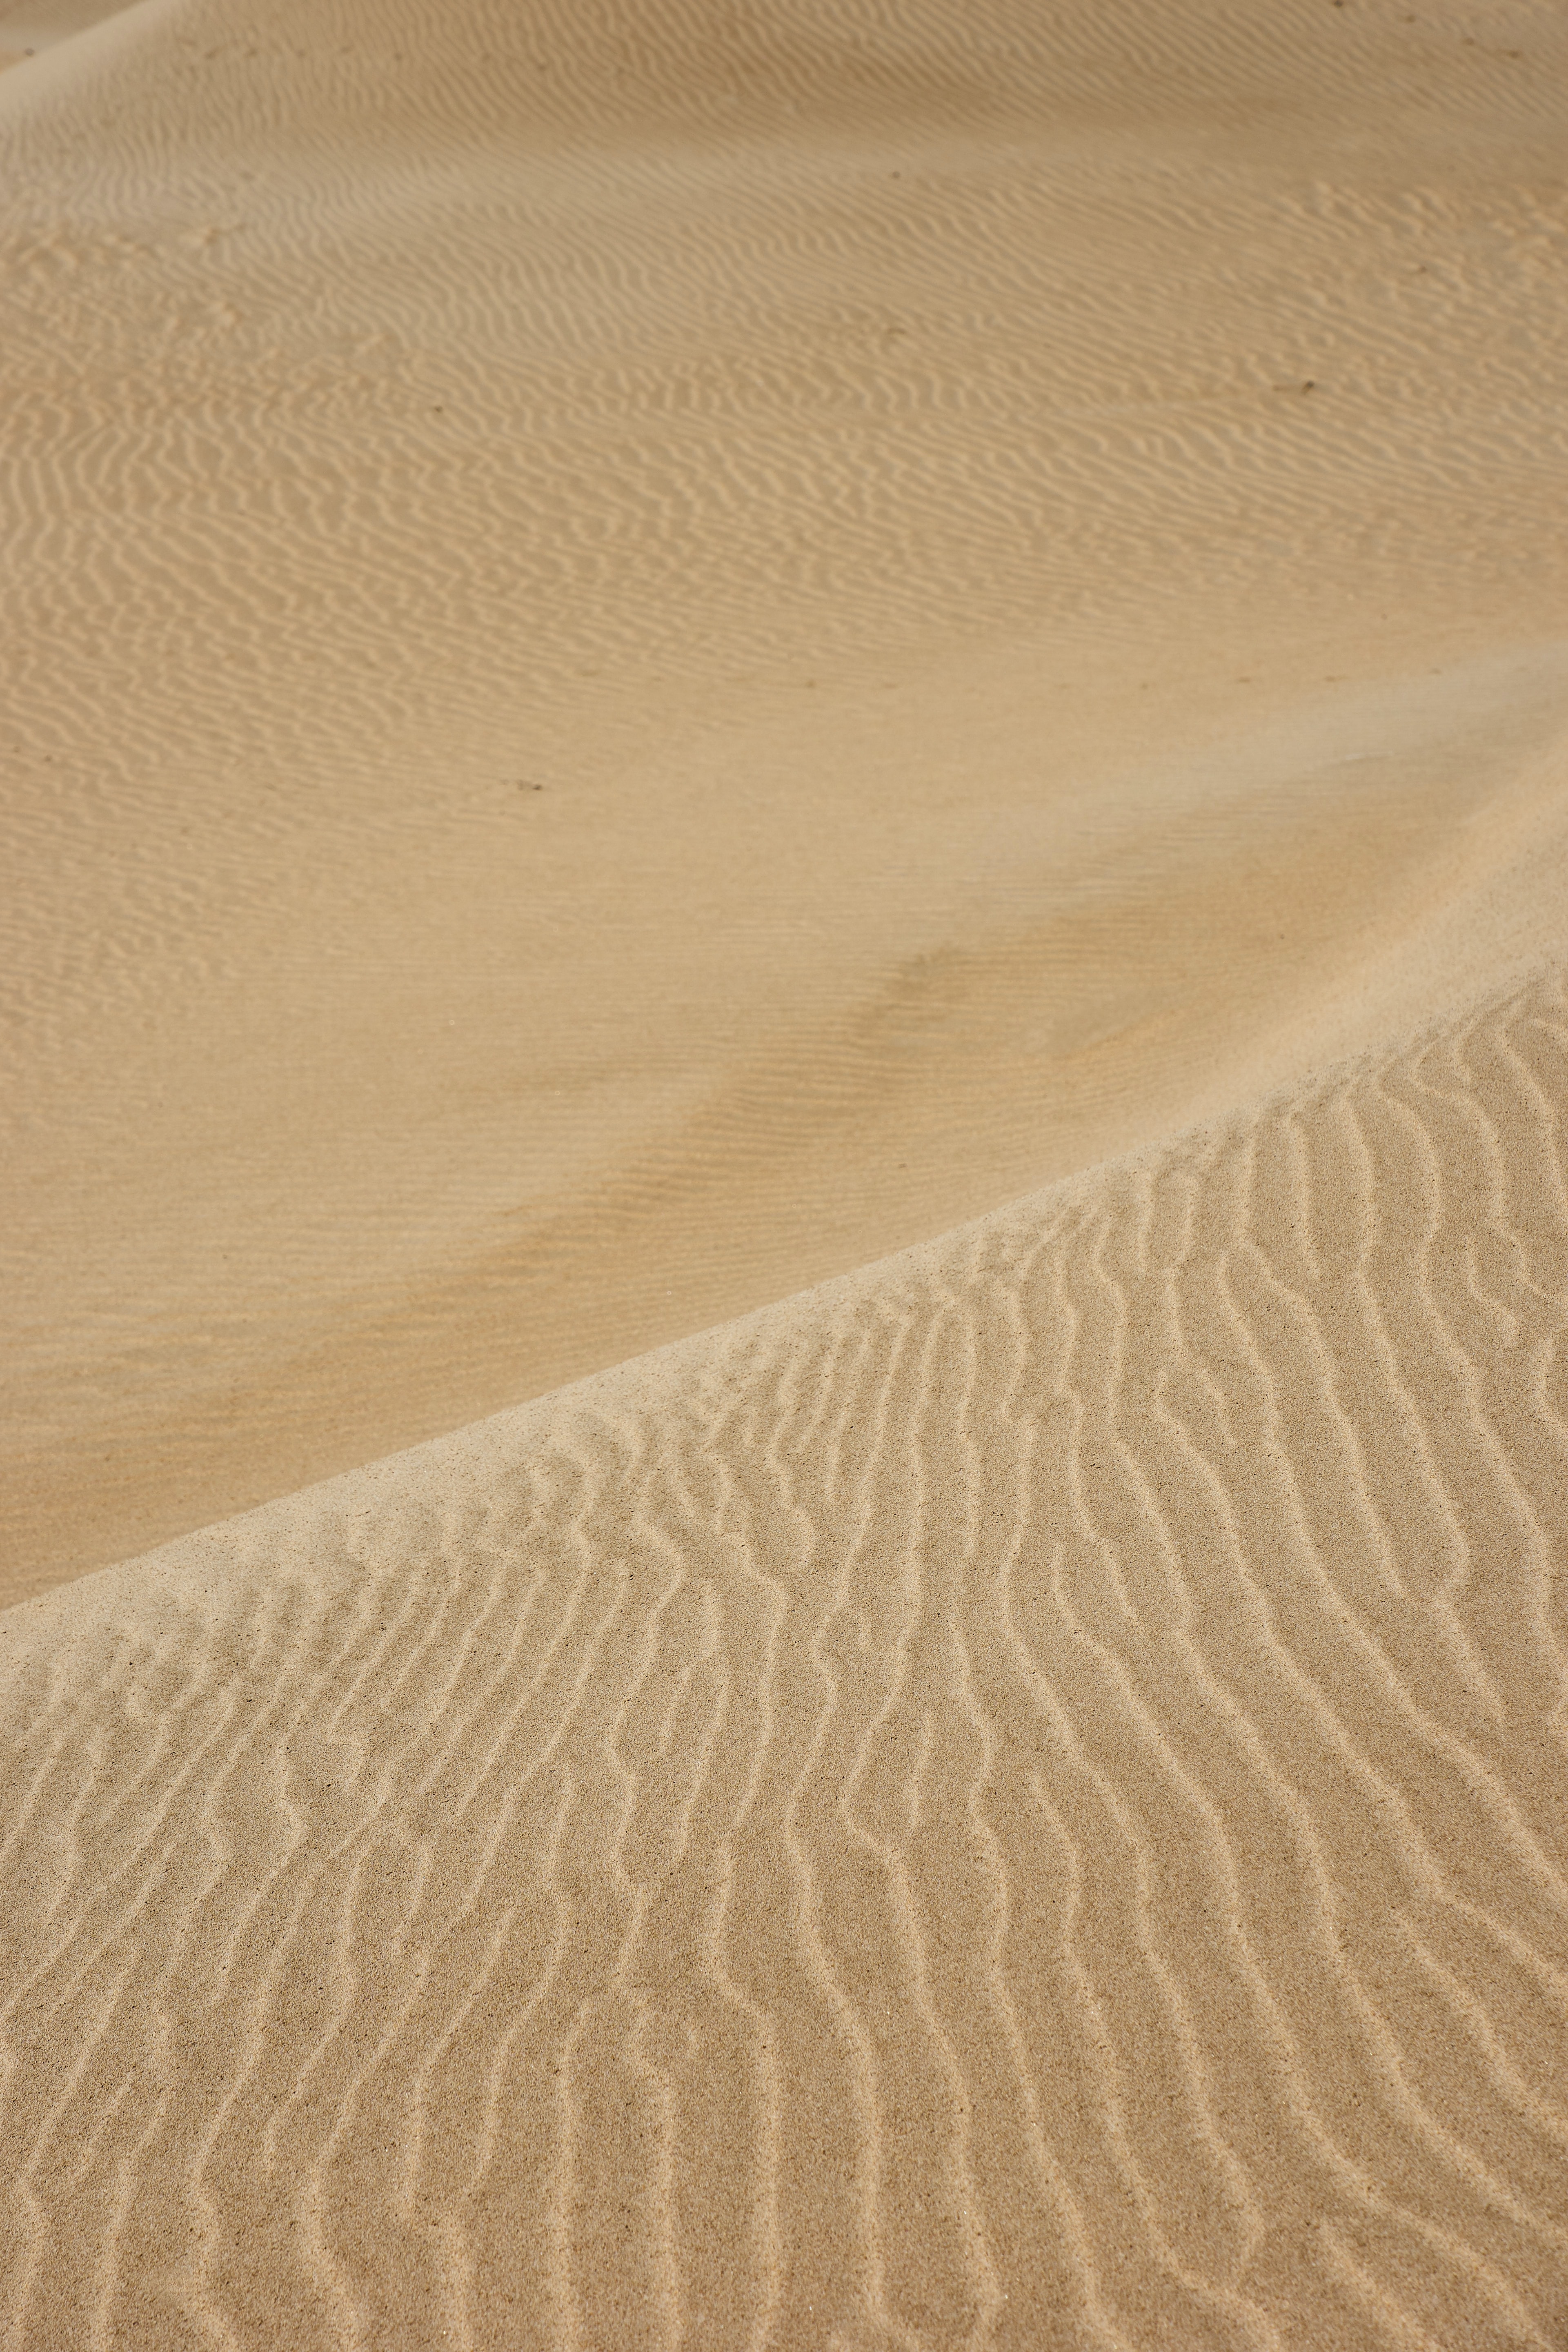 55607 descargar imagen naturaleza, ondas, arena, desierto, huellas, rastros, dunas: fondos de pantalla y protectores de pantalla gratis